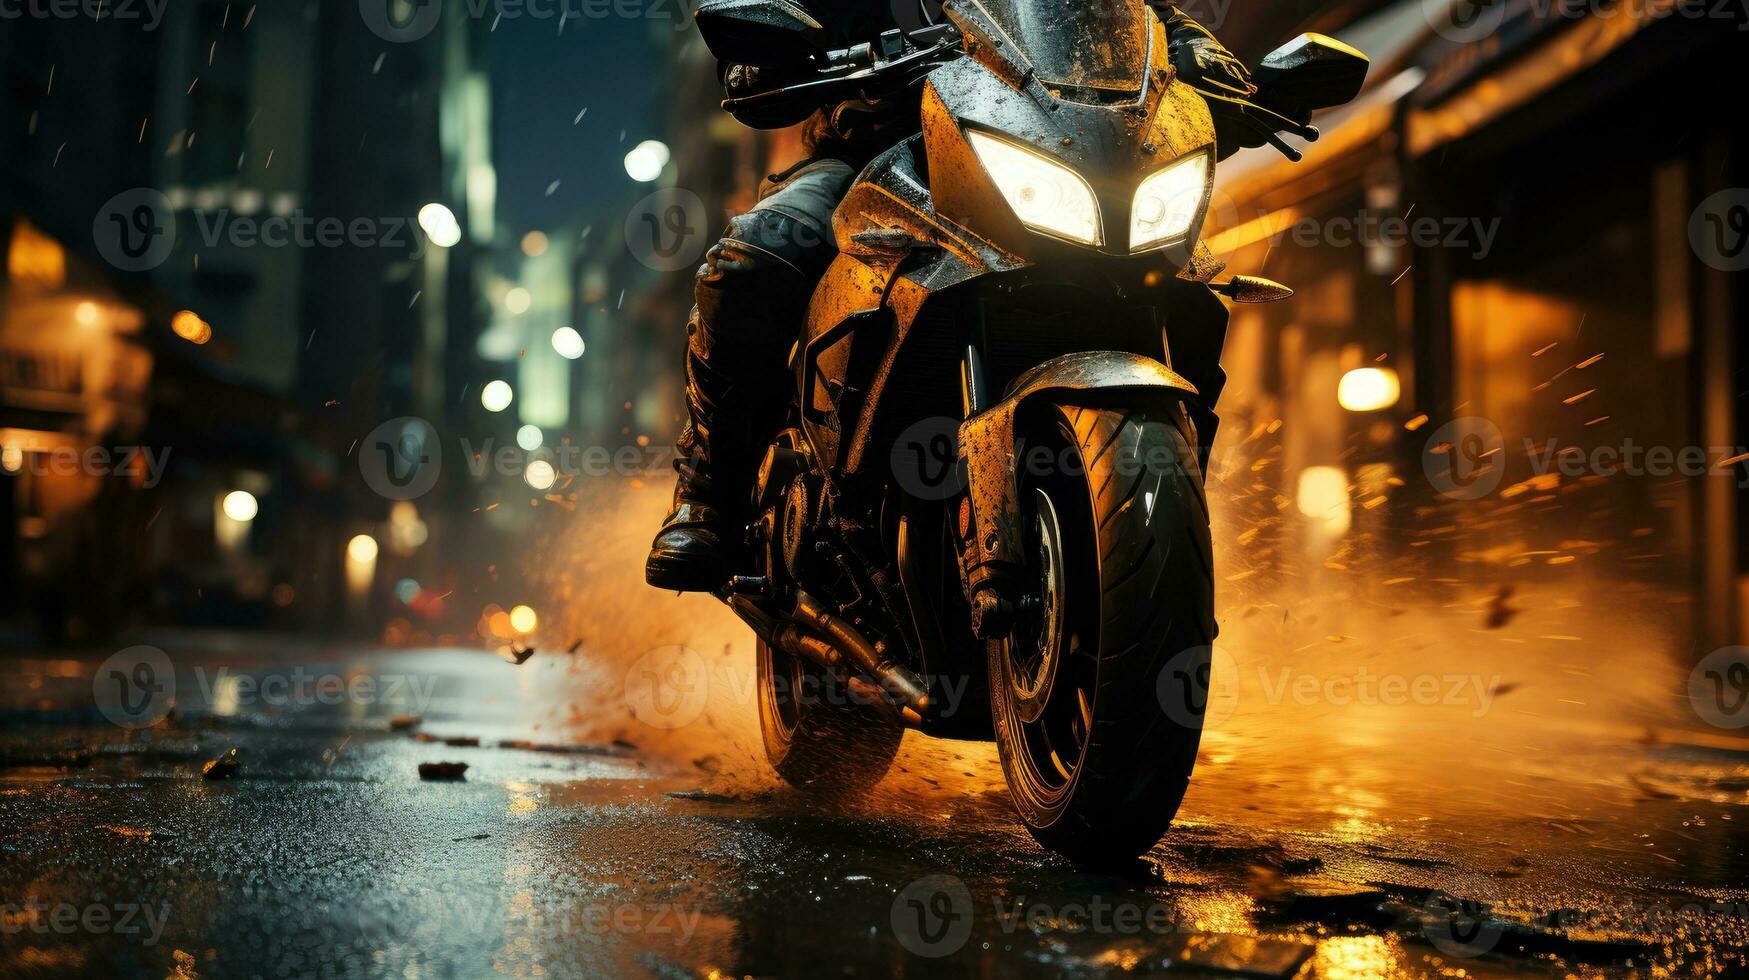 Urban Wheelie - A Dynamic Action Shot Of A Motorcycle Performing A Wheelie On An Urban Street. Generative AI photo